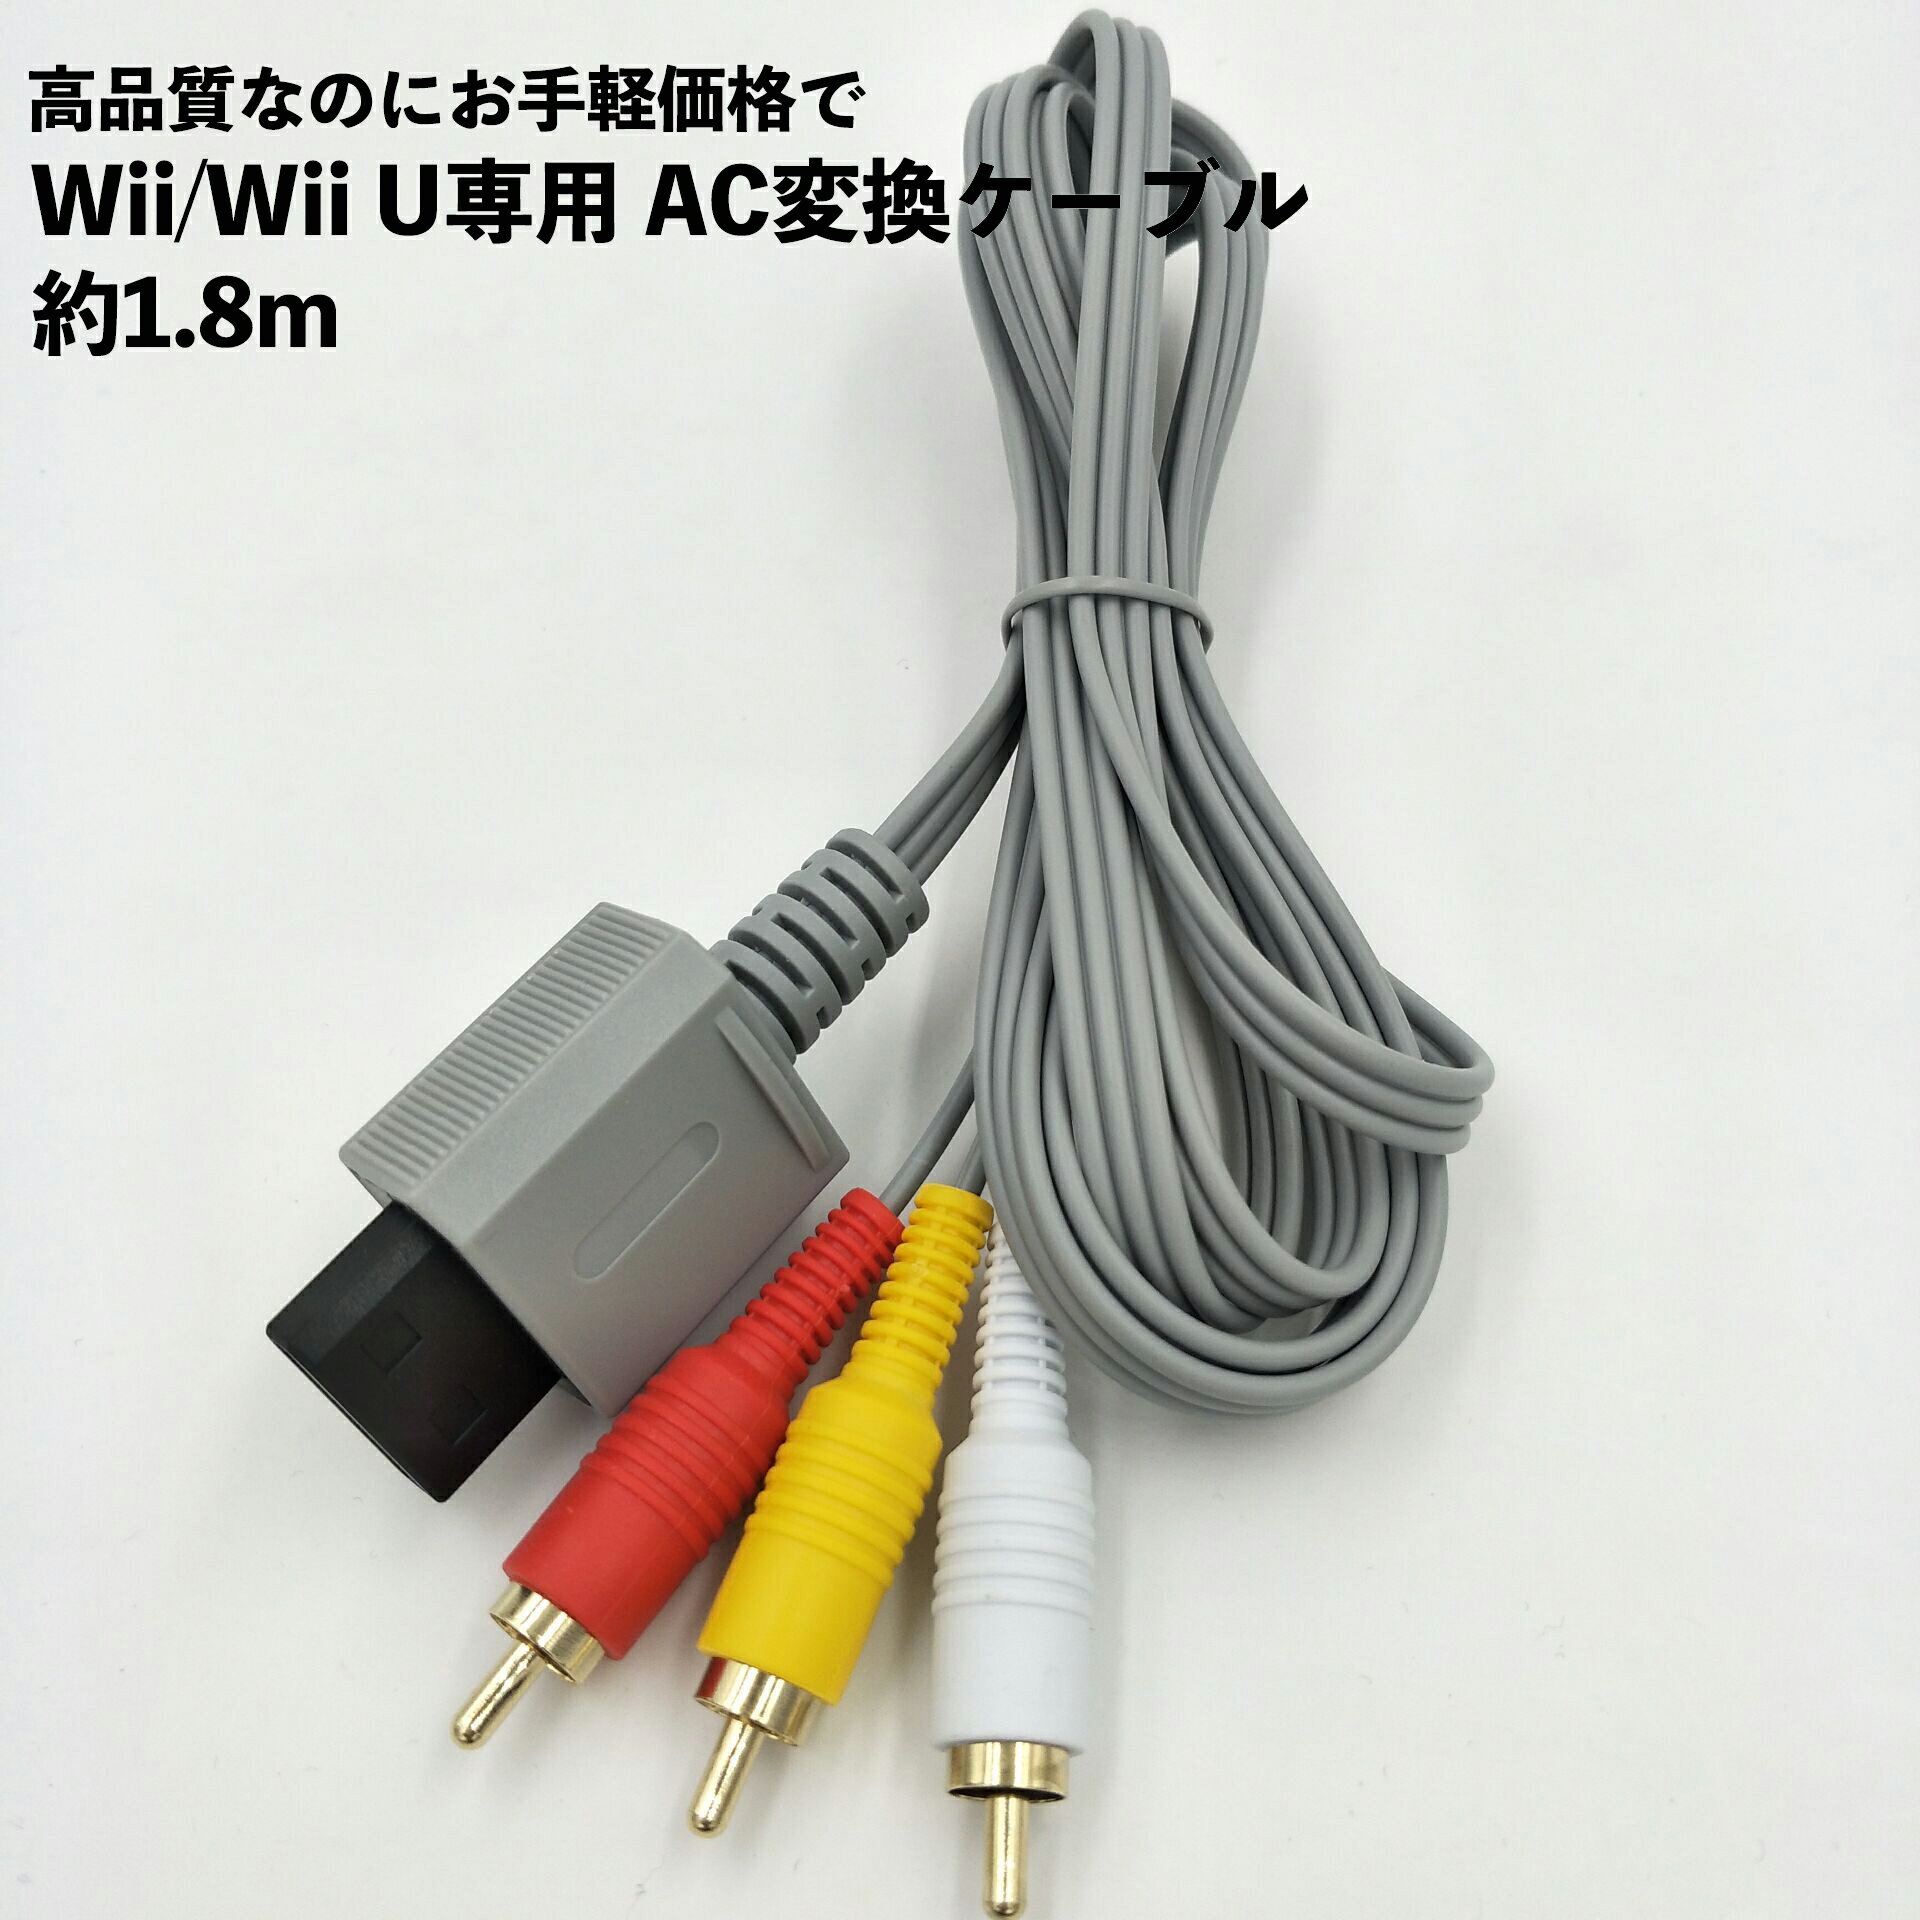 Wii ウィー AVケーブル 3色 RCA出力 断線防止 出力 1.8m ケーブル AV変換ケーブル